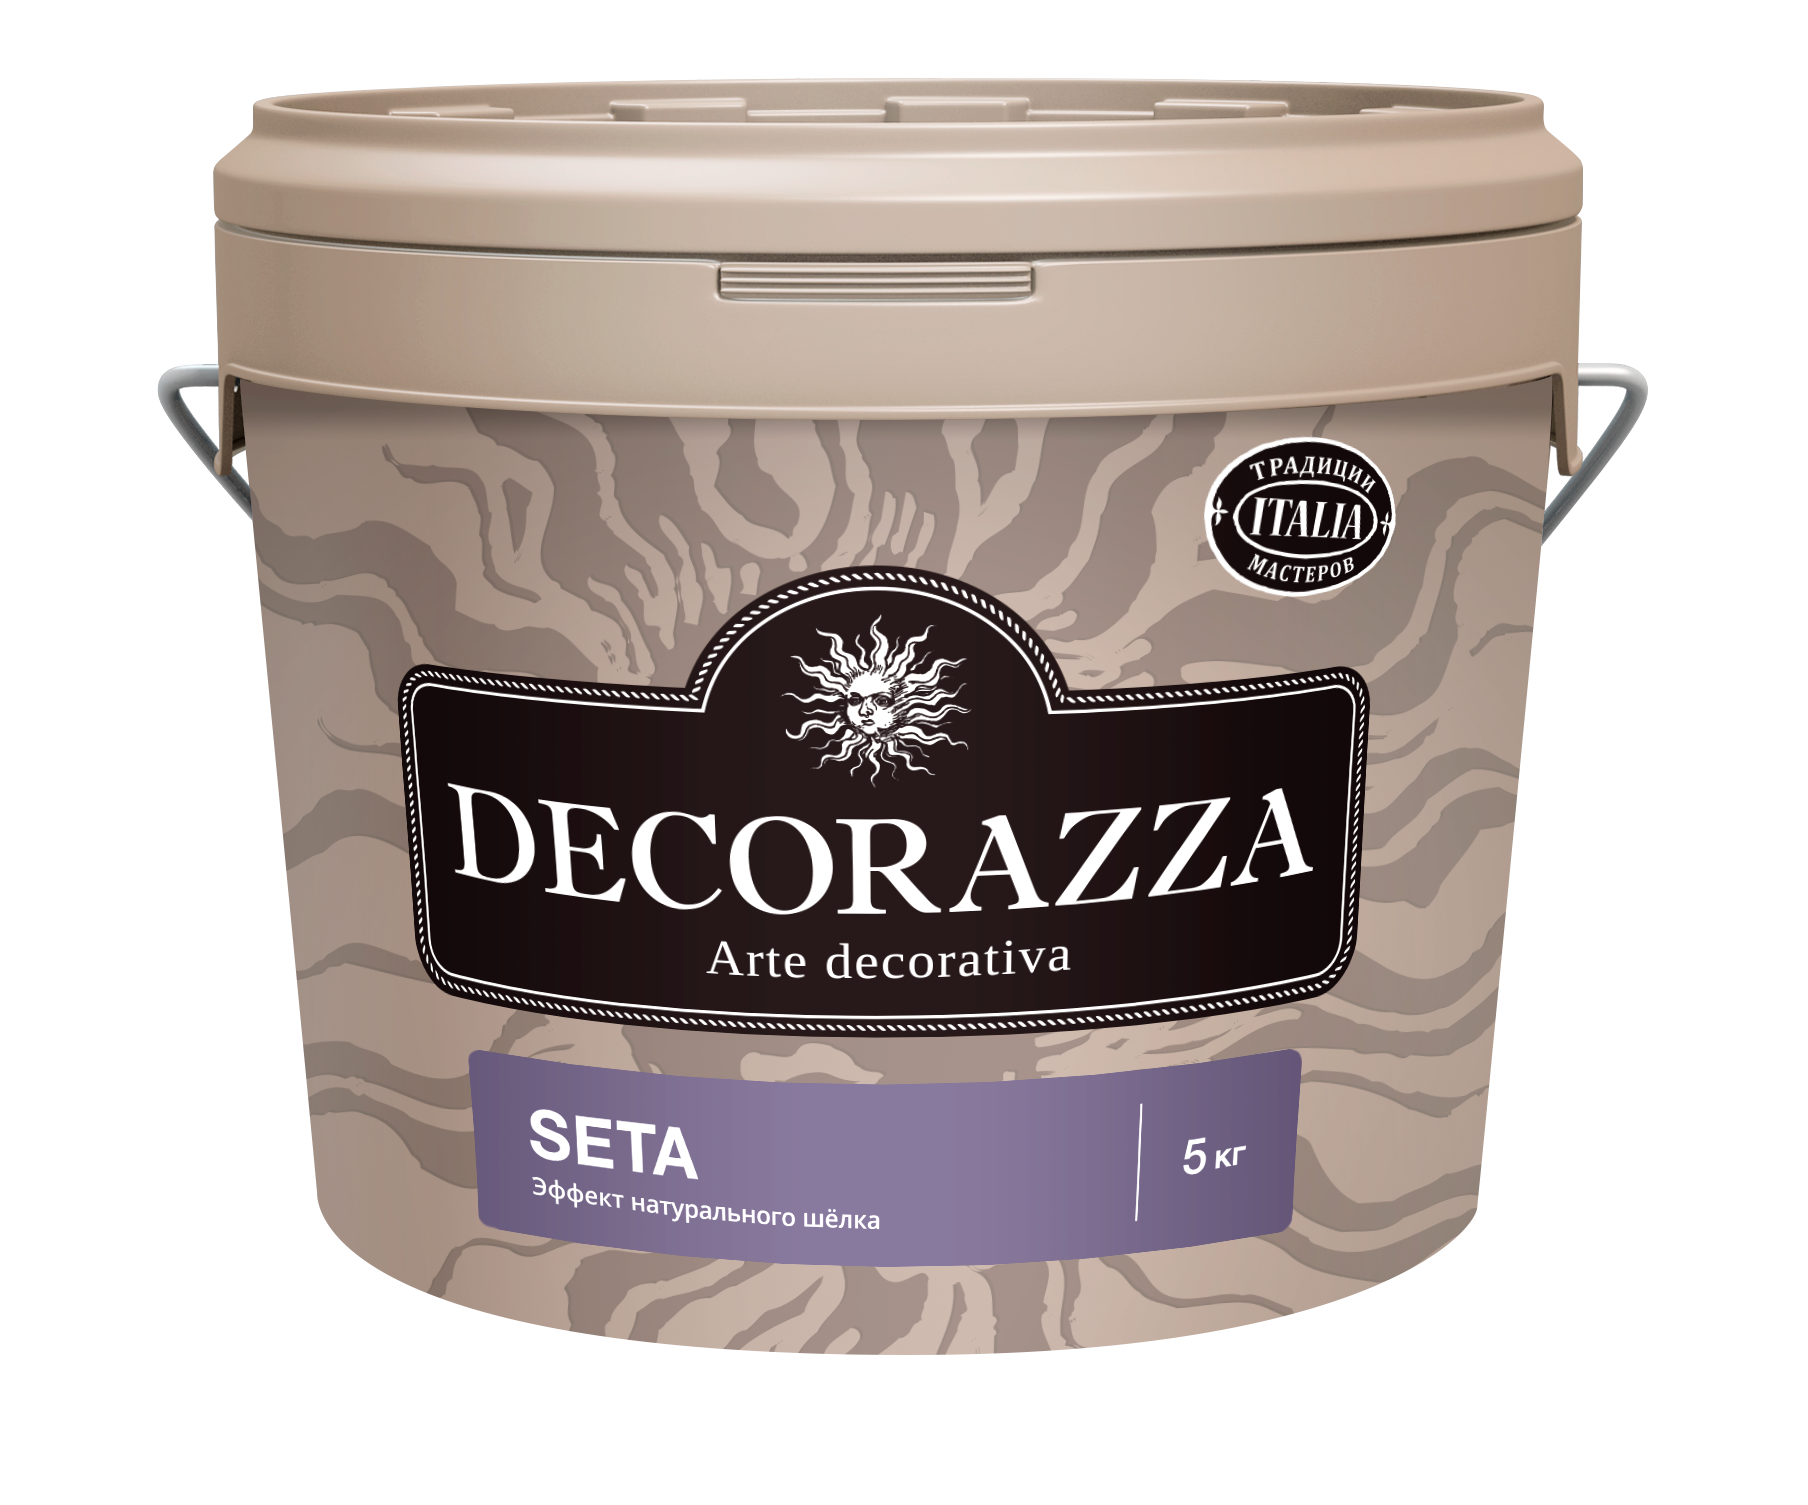 Декоративная штукатурка Decorazza Seta Argento ST 001, серебро, 5 кг покрытие декоративное dufa creative la seta matt эффект велюра база argento 1 2 кг